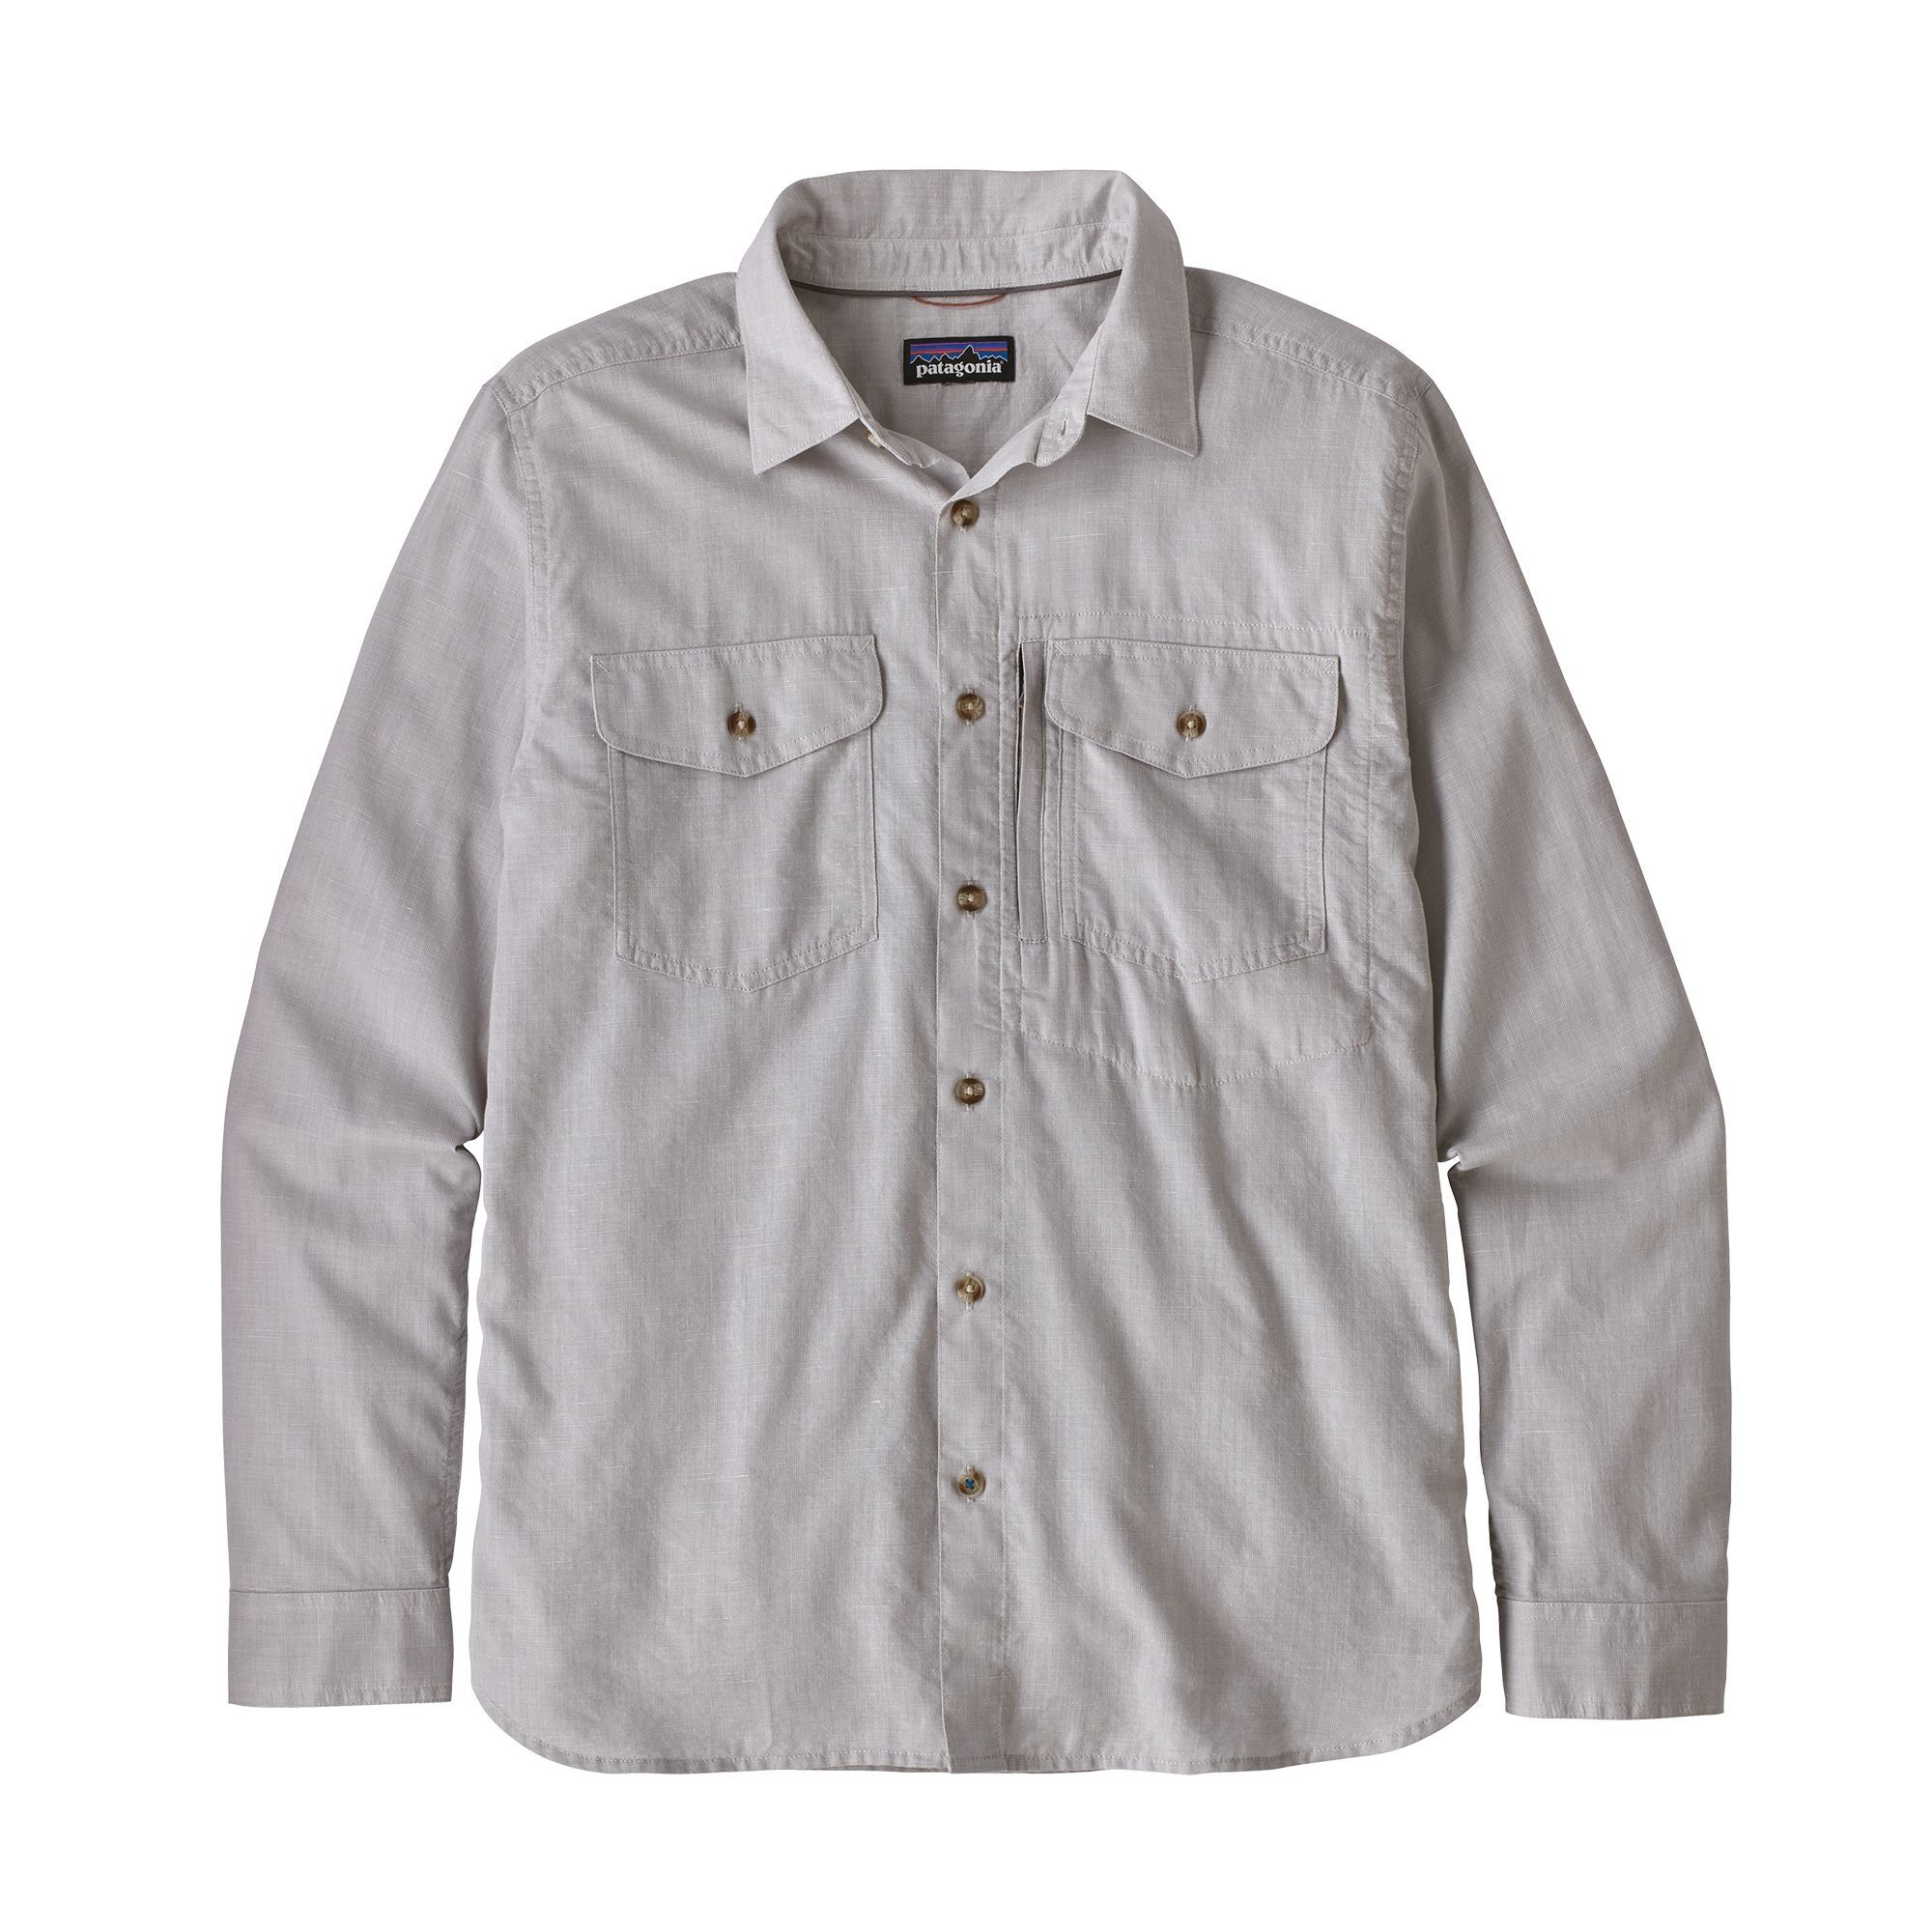 Patagonia Cayo Largo II Shirt, skjorte herre Chambray: Feather Grey 52126-CHFG S 2019